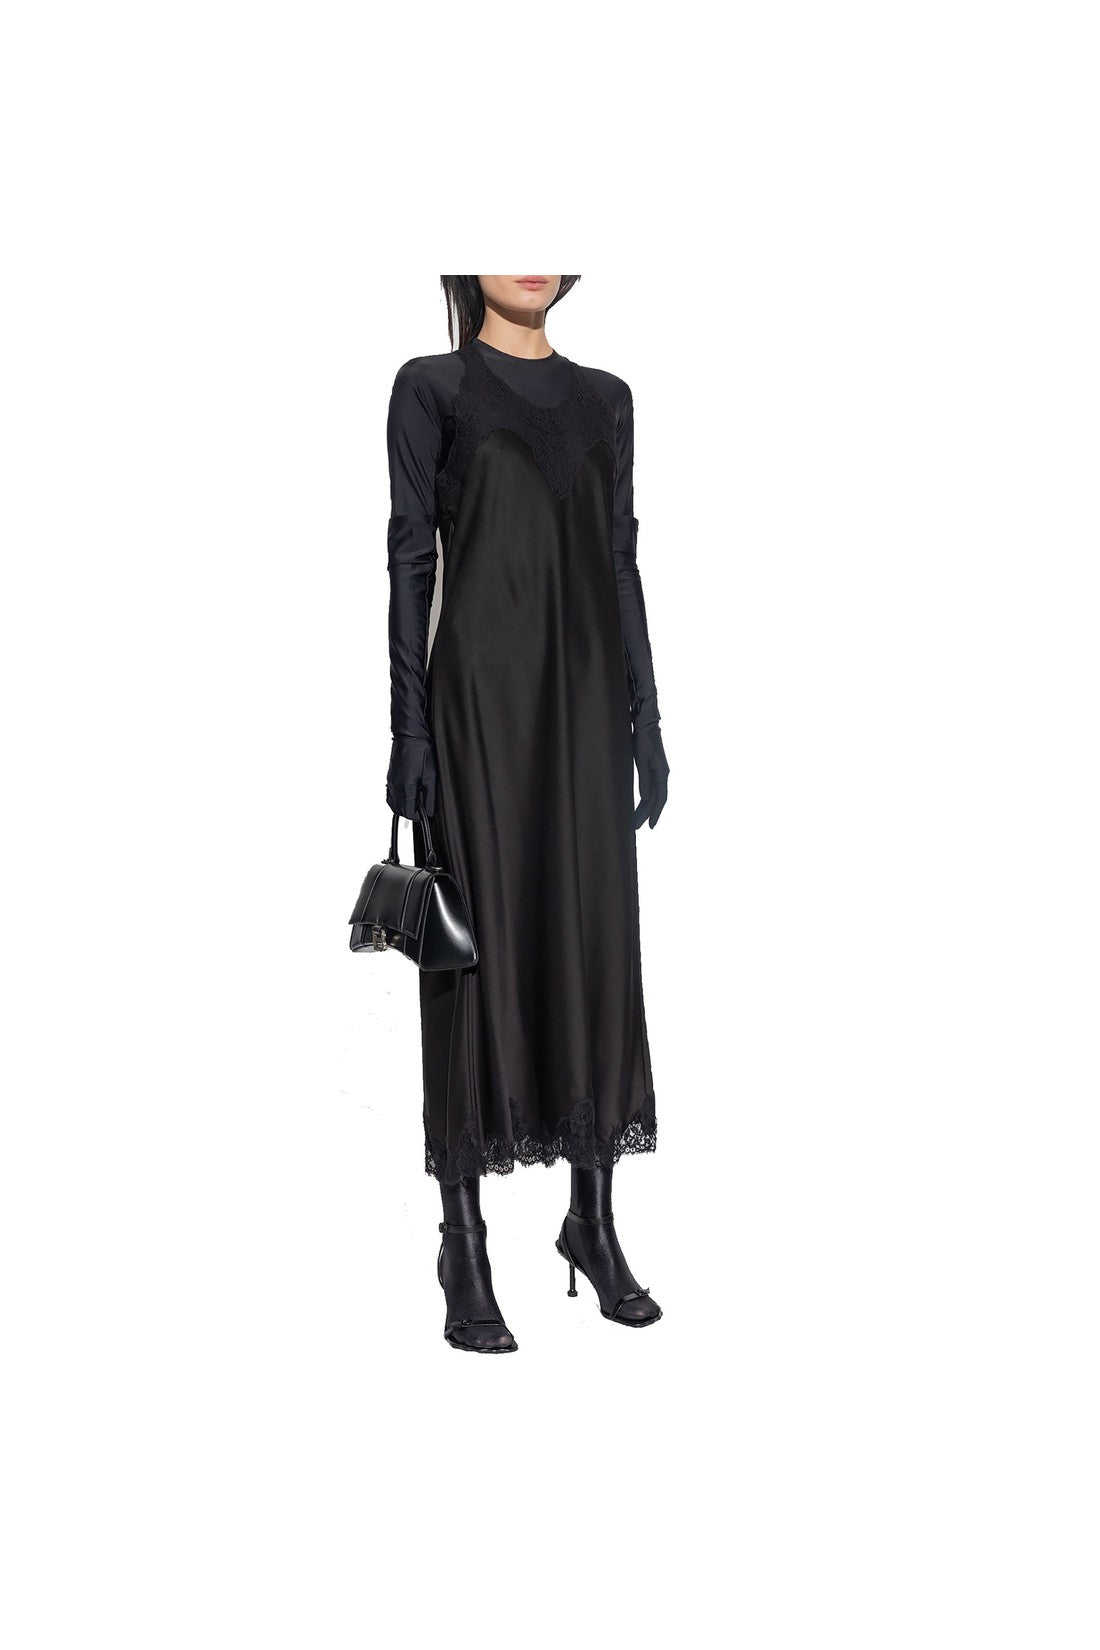 BALENCIAGA Satin Strappy Midi Dress